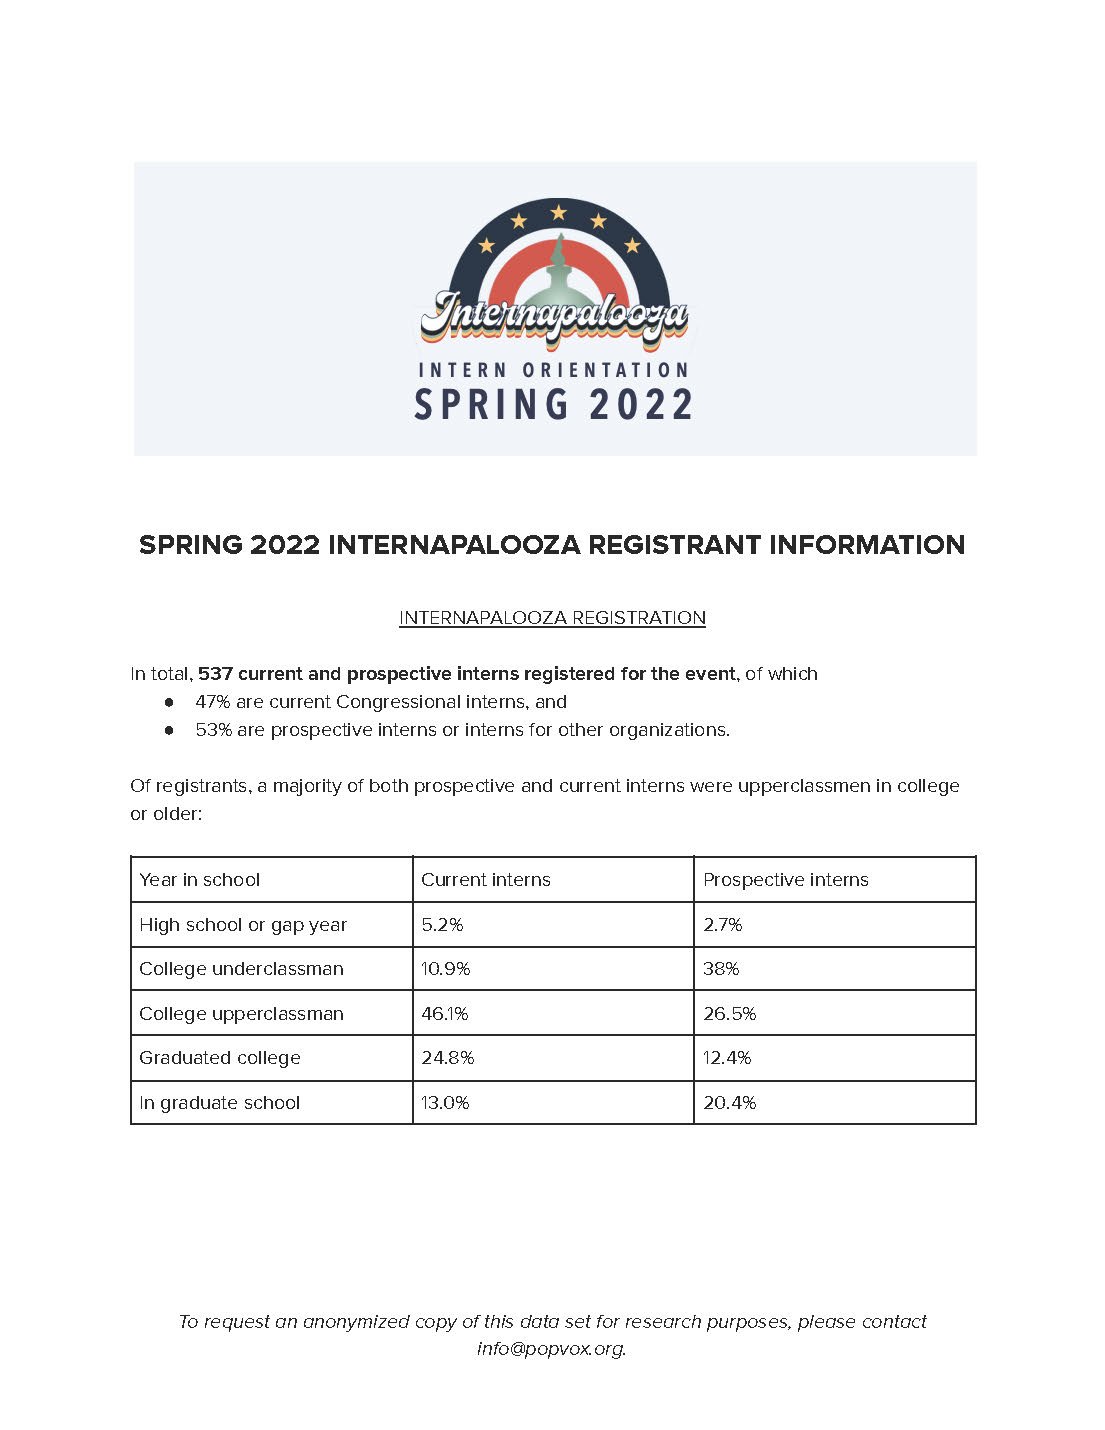 Spring 22 Internapalooza fact sheet_Page_1.jpg